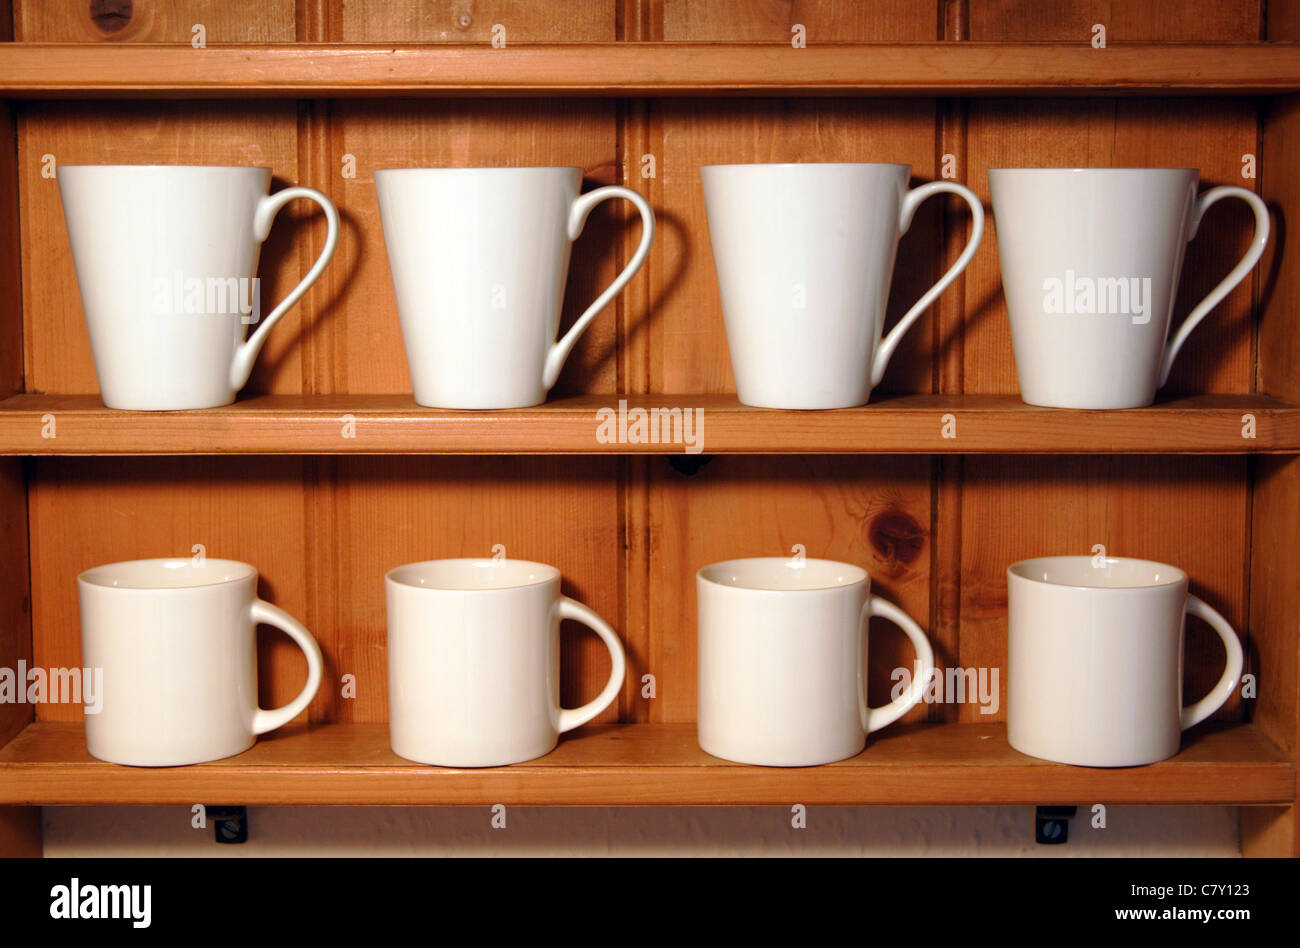 White mugs displayed on wooden shelves Stock Photo